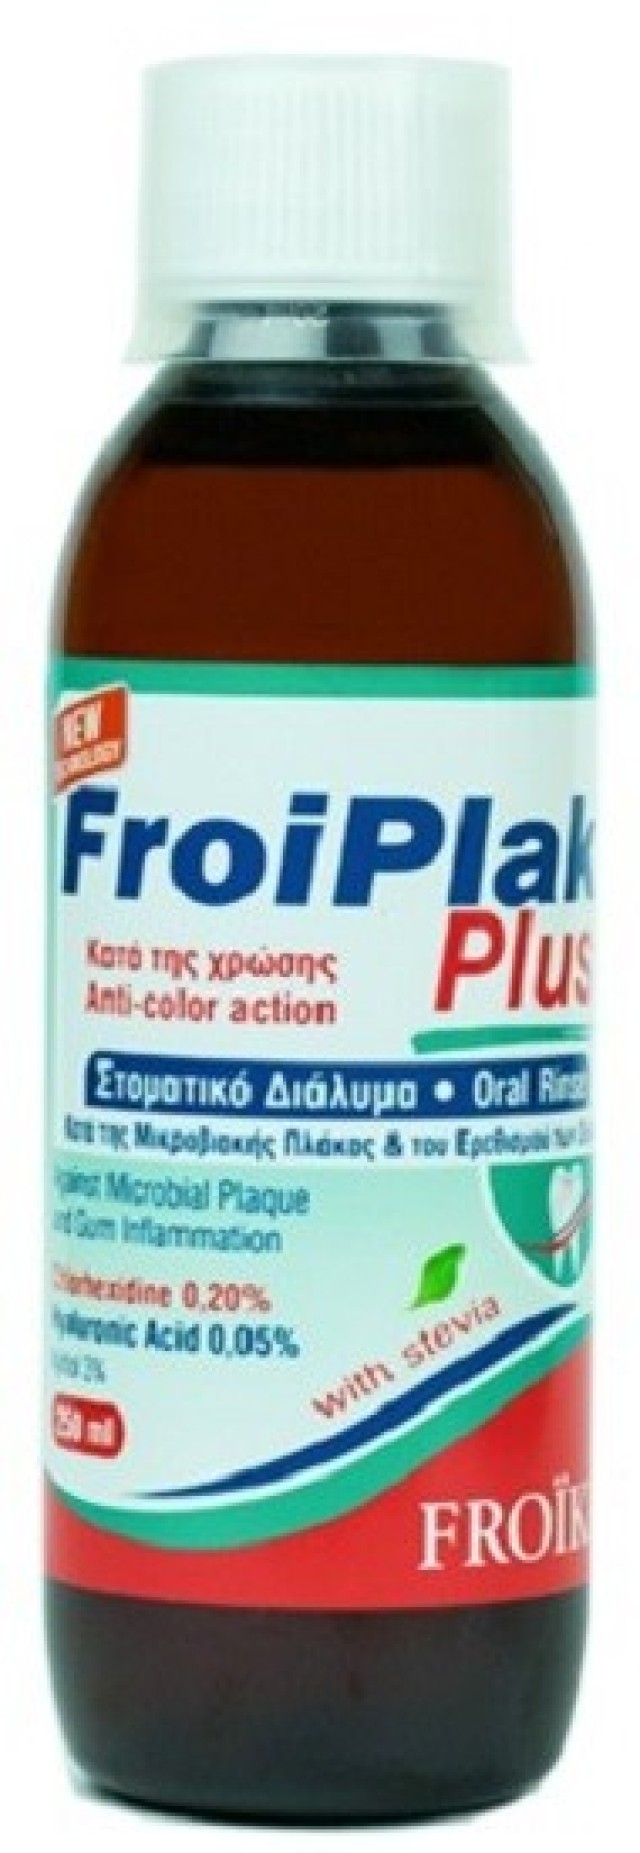 Froika Froiplak Plus Στοματικό Διάλυμα Κατά της Μικροβιακής Πλάκας 250ml